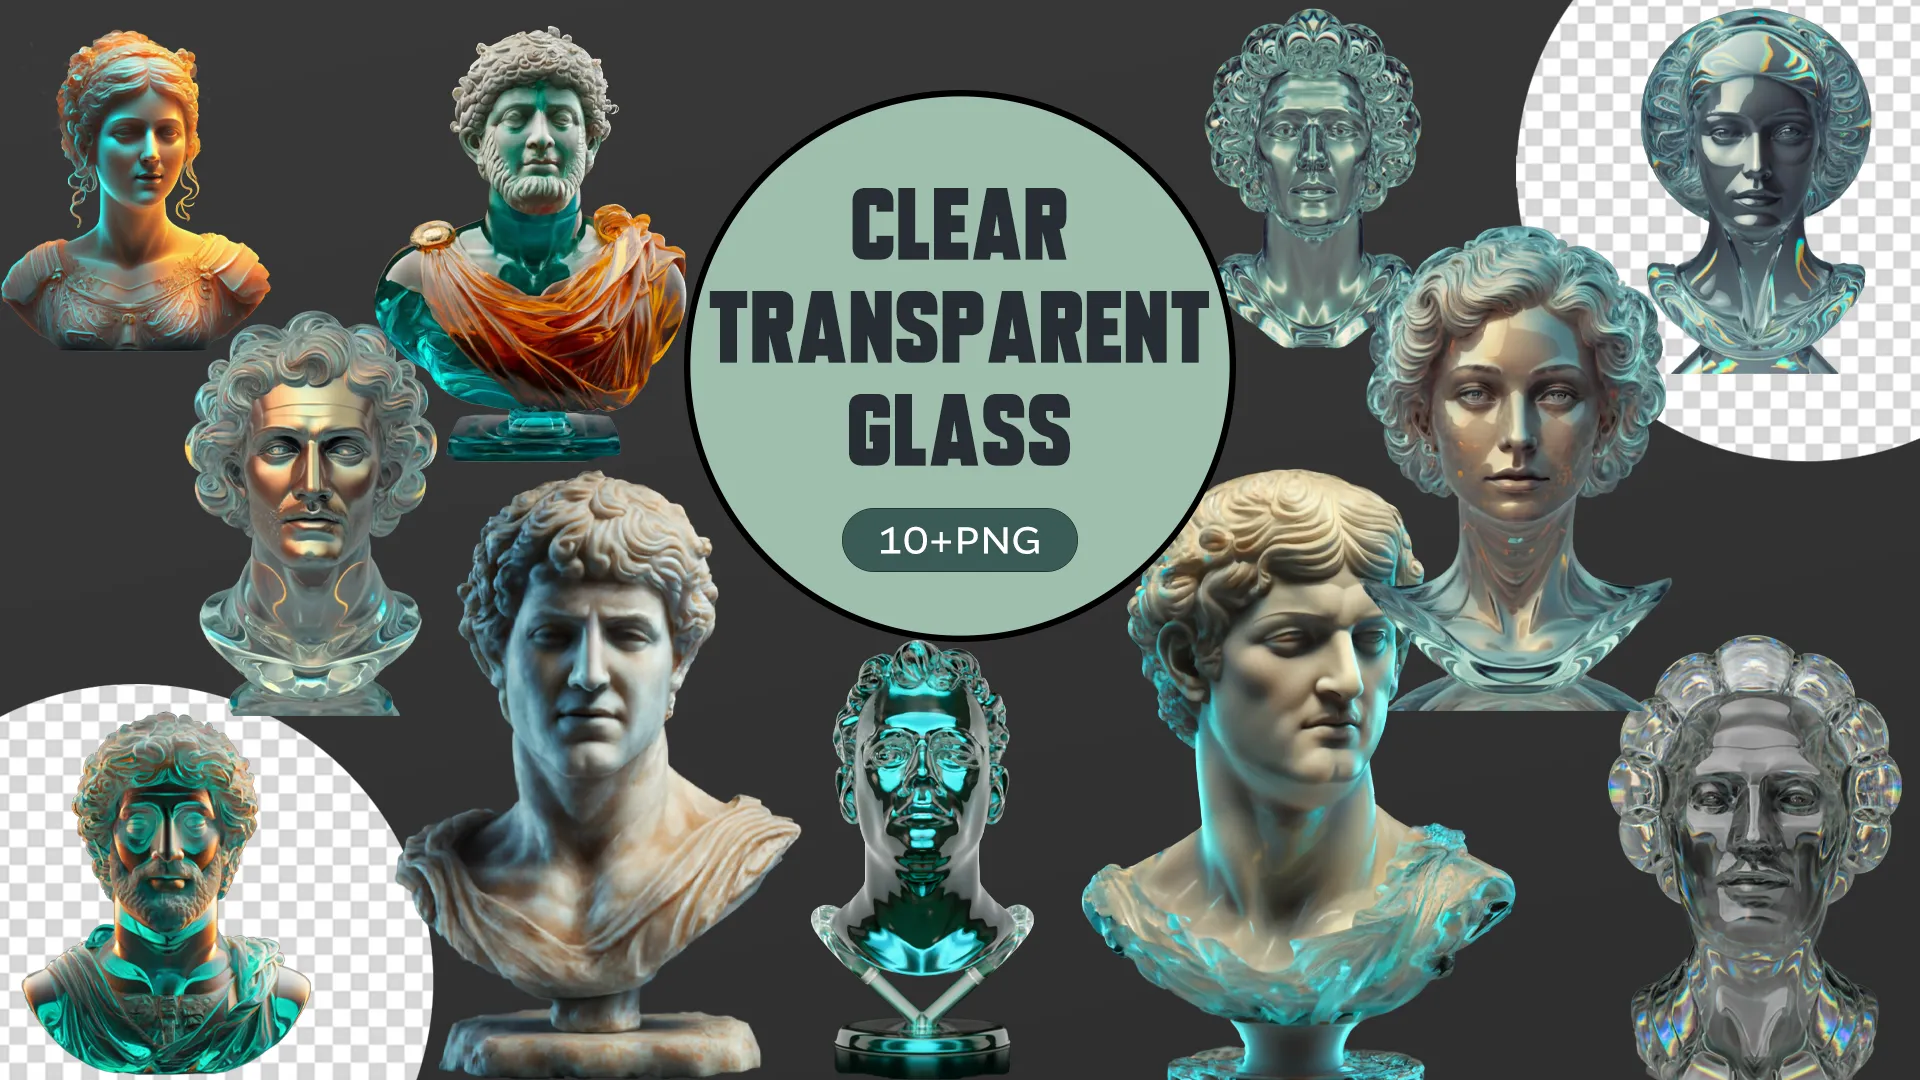 Ancient Philosophers Glass Models 3D Pack for Historians